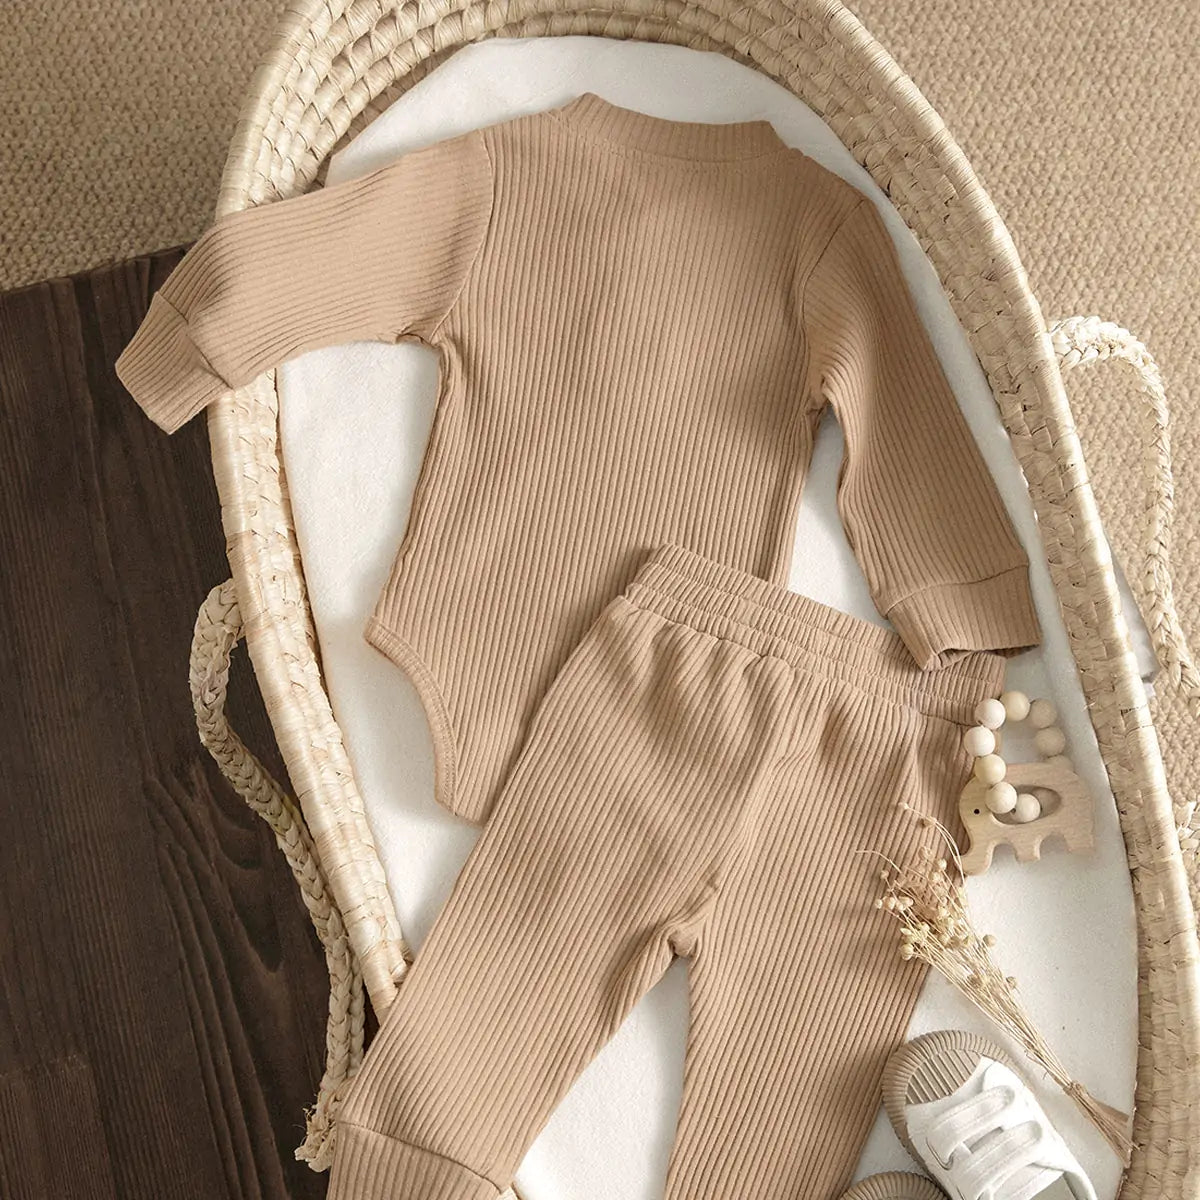 Infant Knitted Clothing set